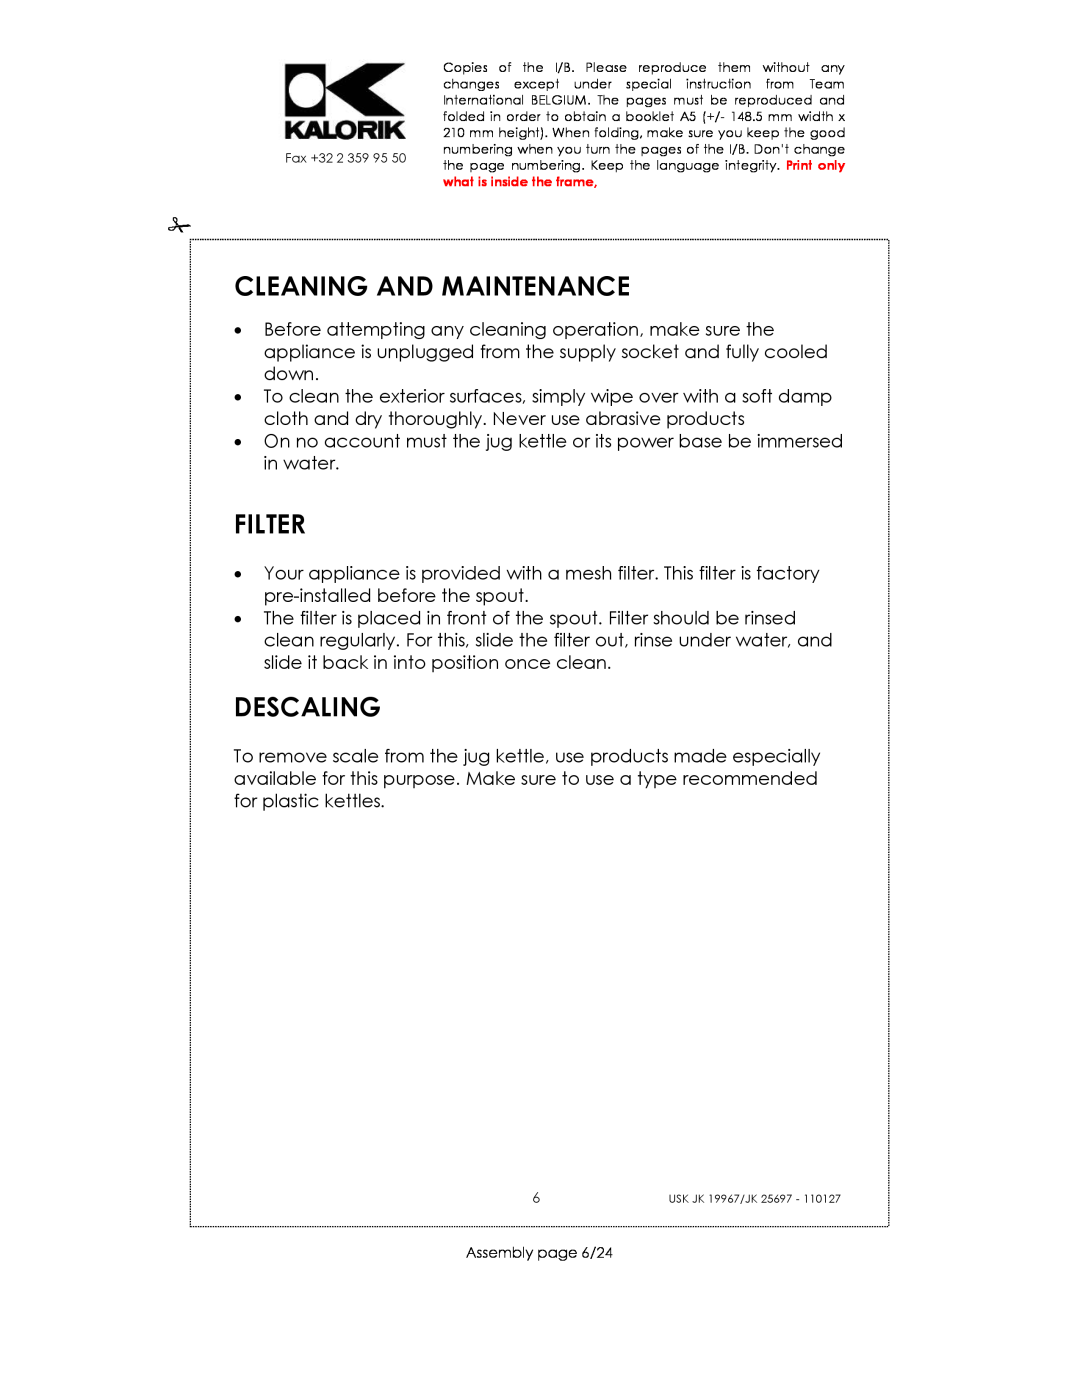 Kalorik JK 19967, JK 25697 manual Cleaning And Maintenance, Filter, Descaling, Assembly page 6/24 